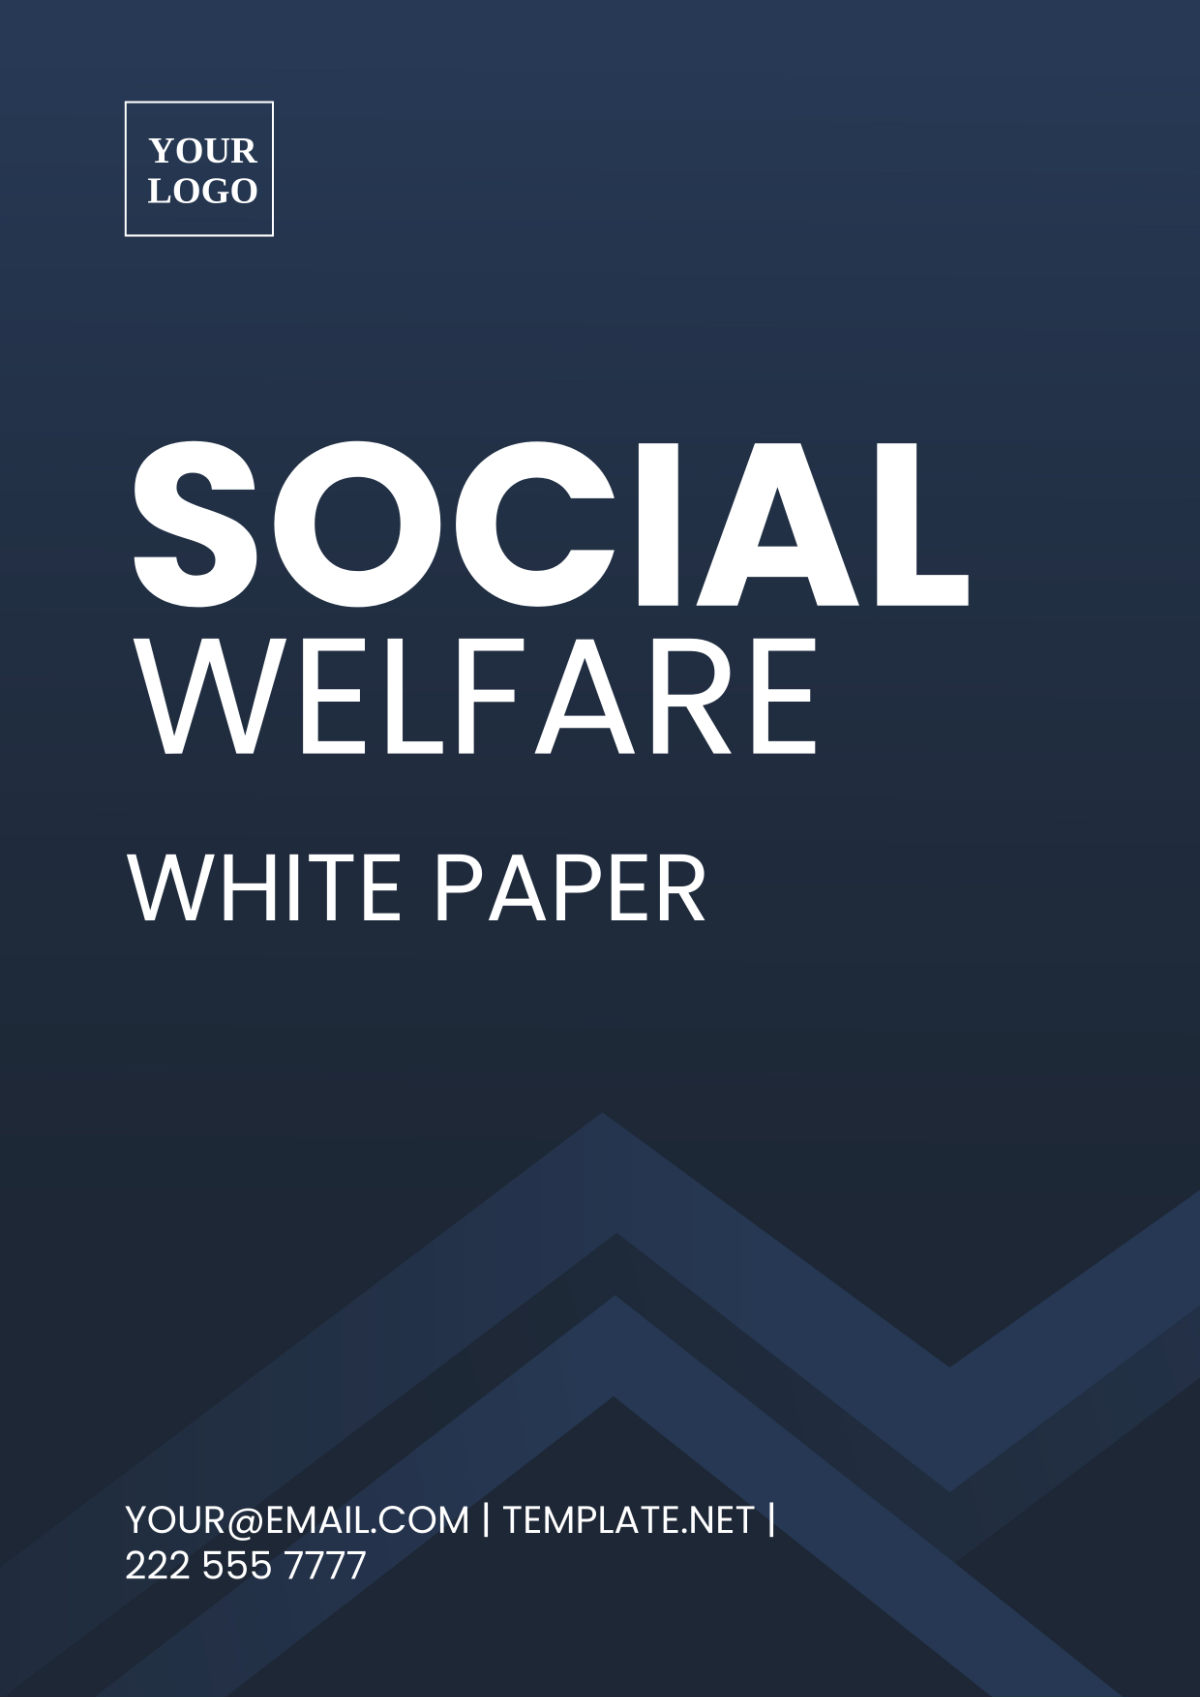 White Paper for Social Welfare Template